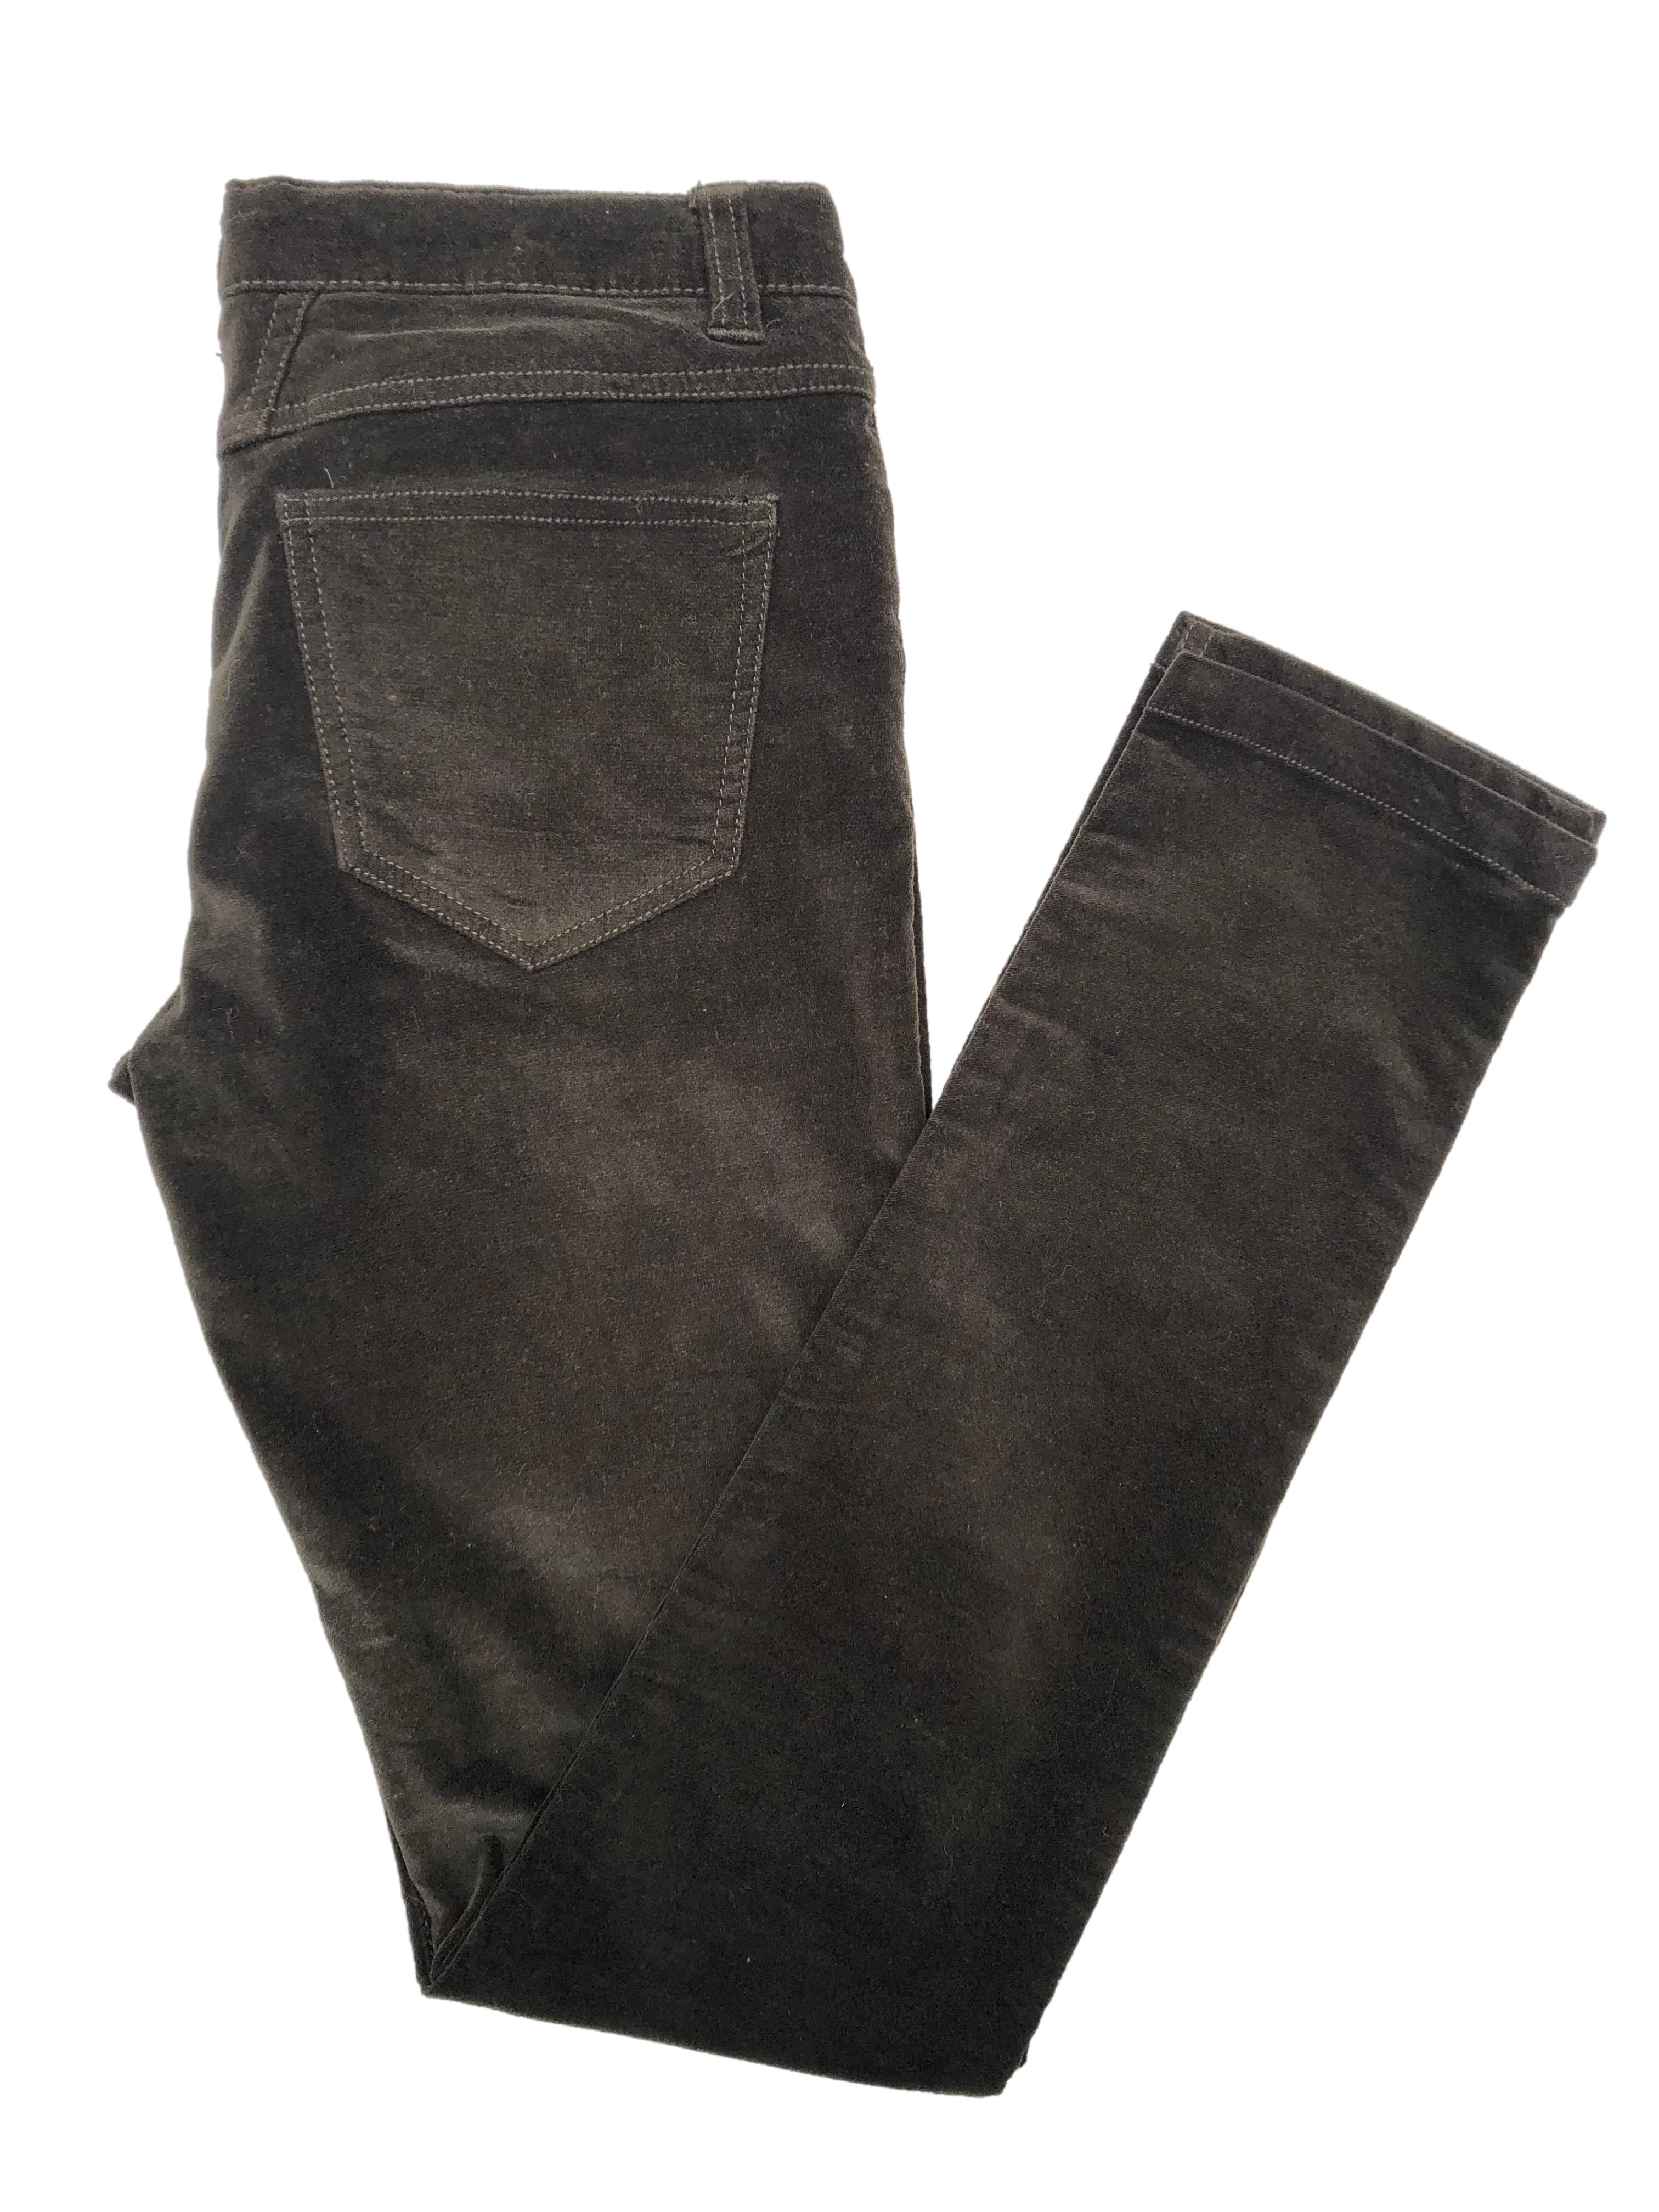 Pantalón Denimlab de corduroy stretch, pitillo, con bolsillos. Pretina 76cm Largo 96cm